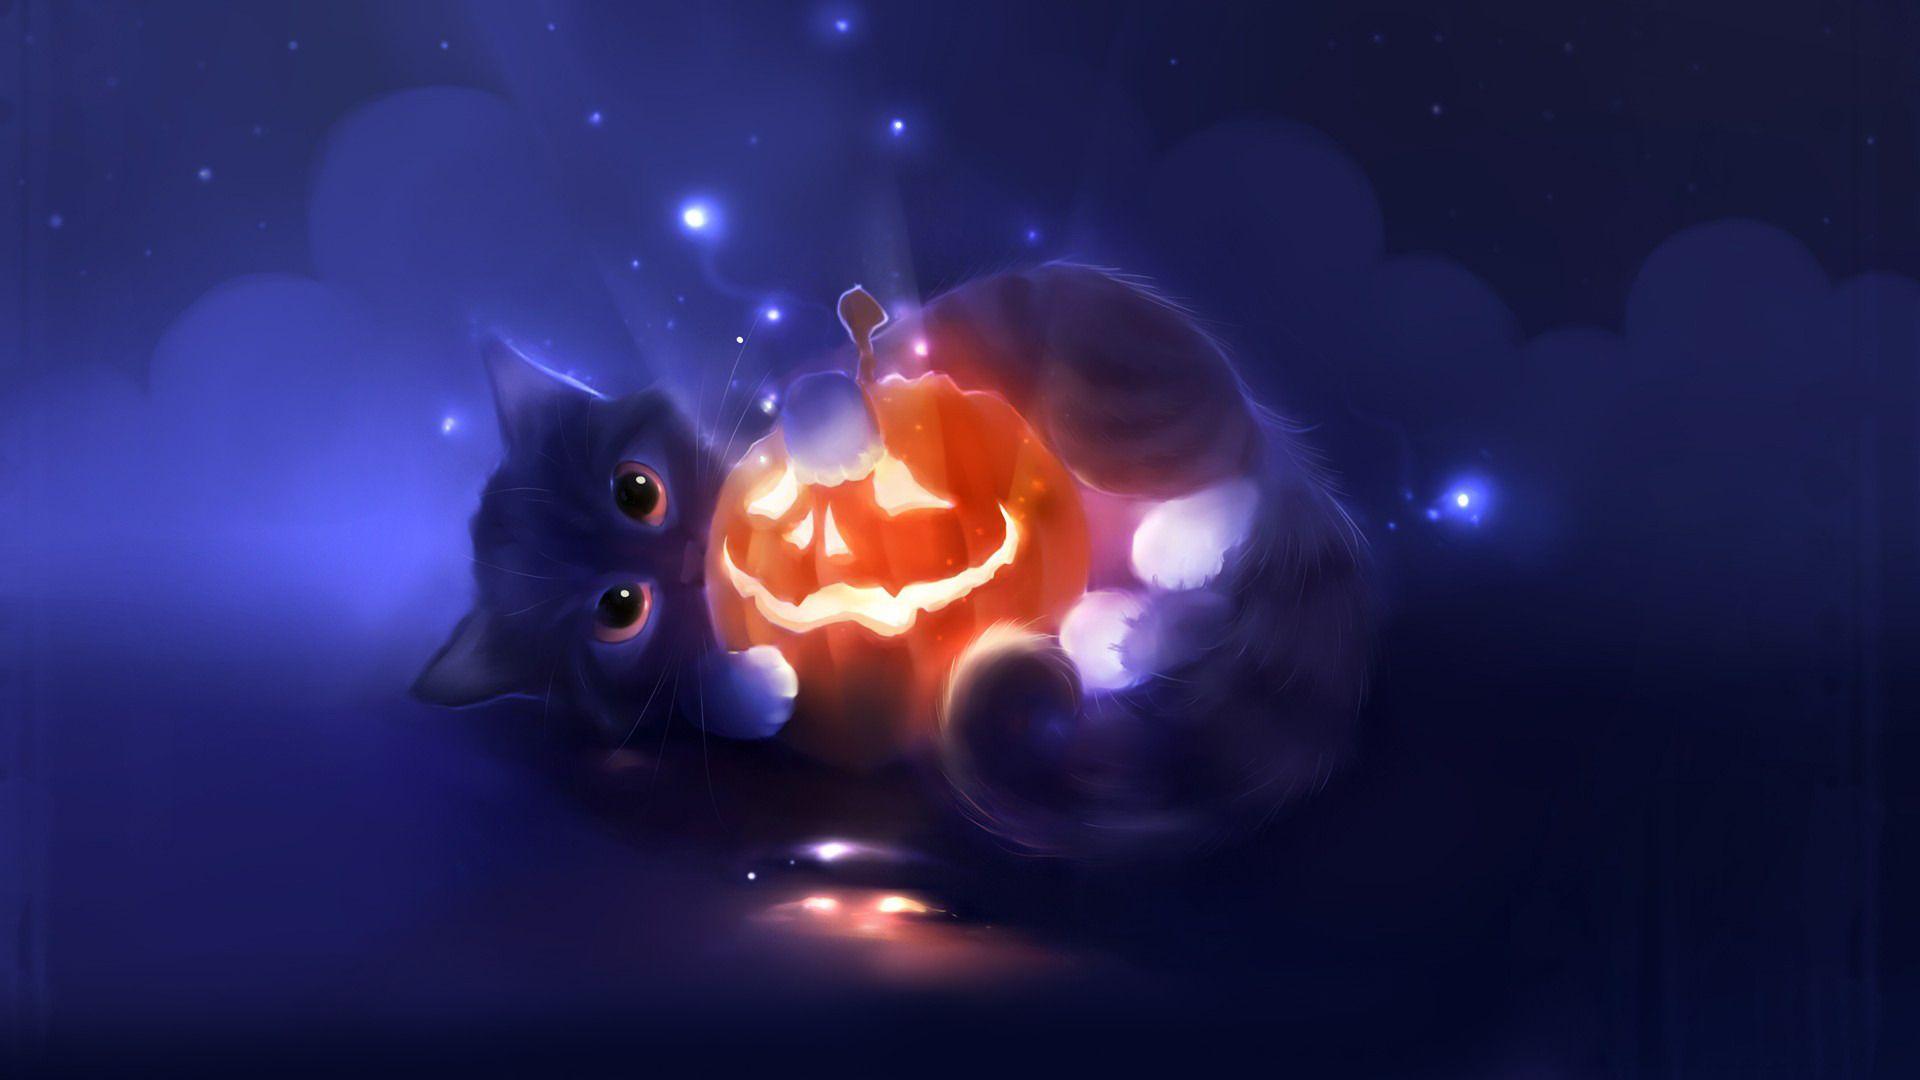 Halloween Kitten Wallpaper